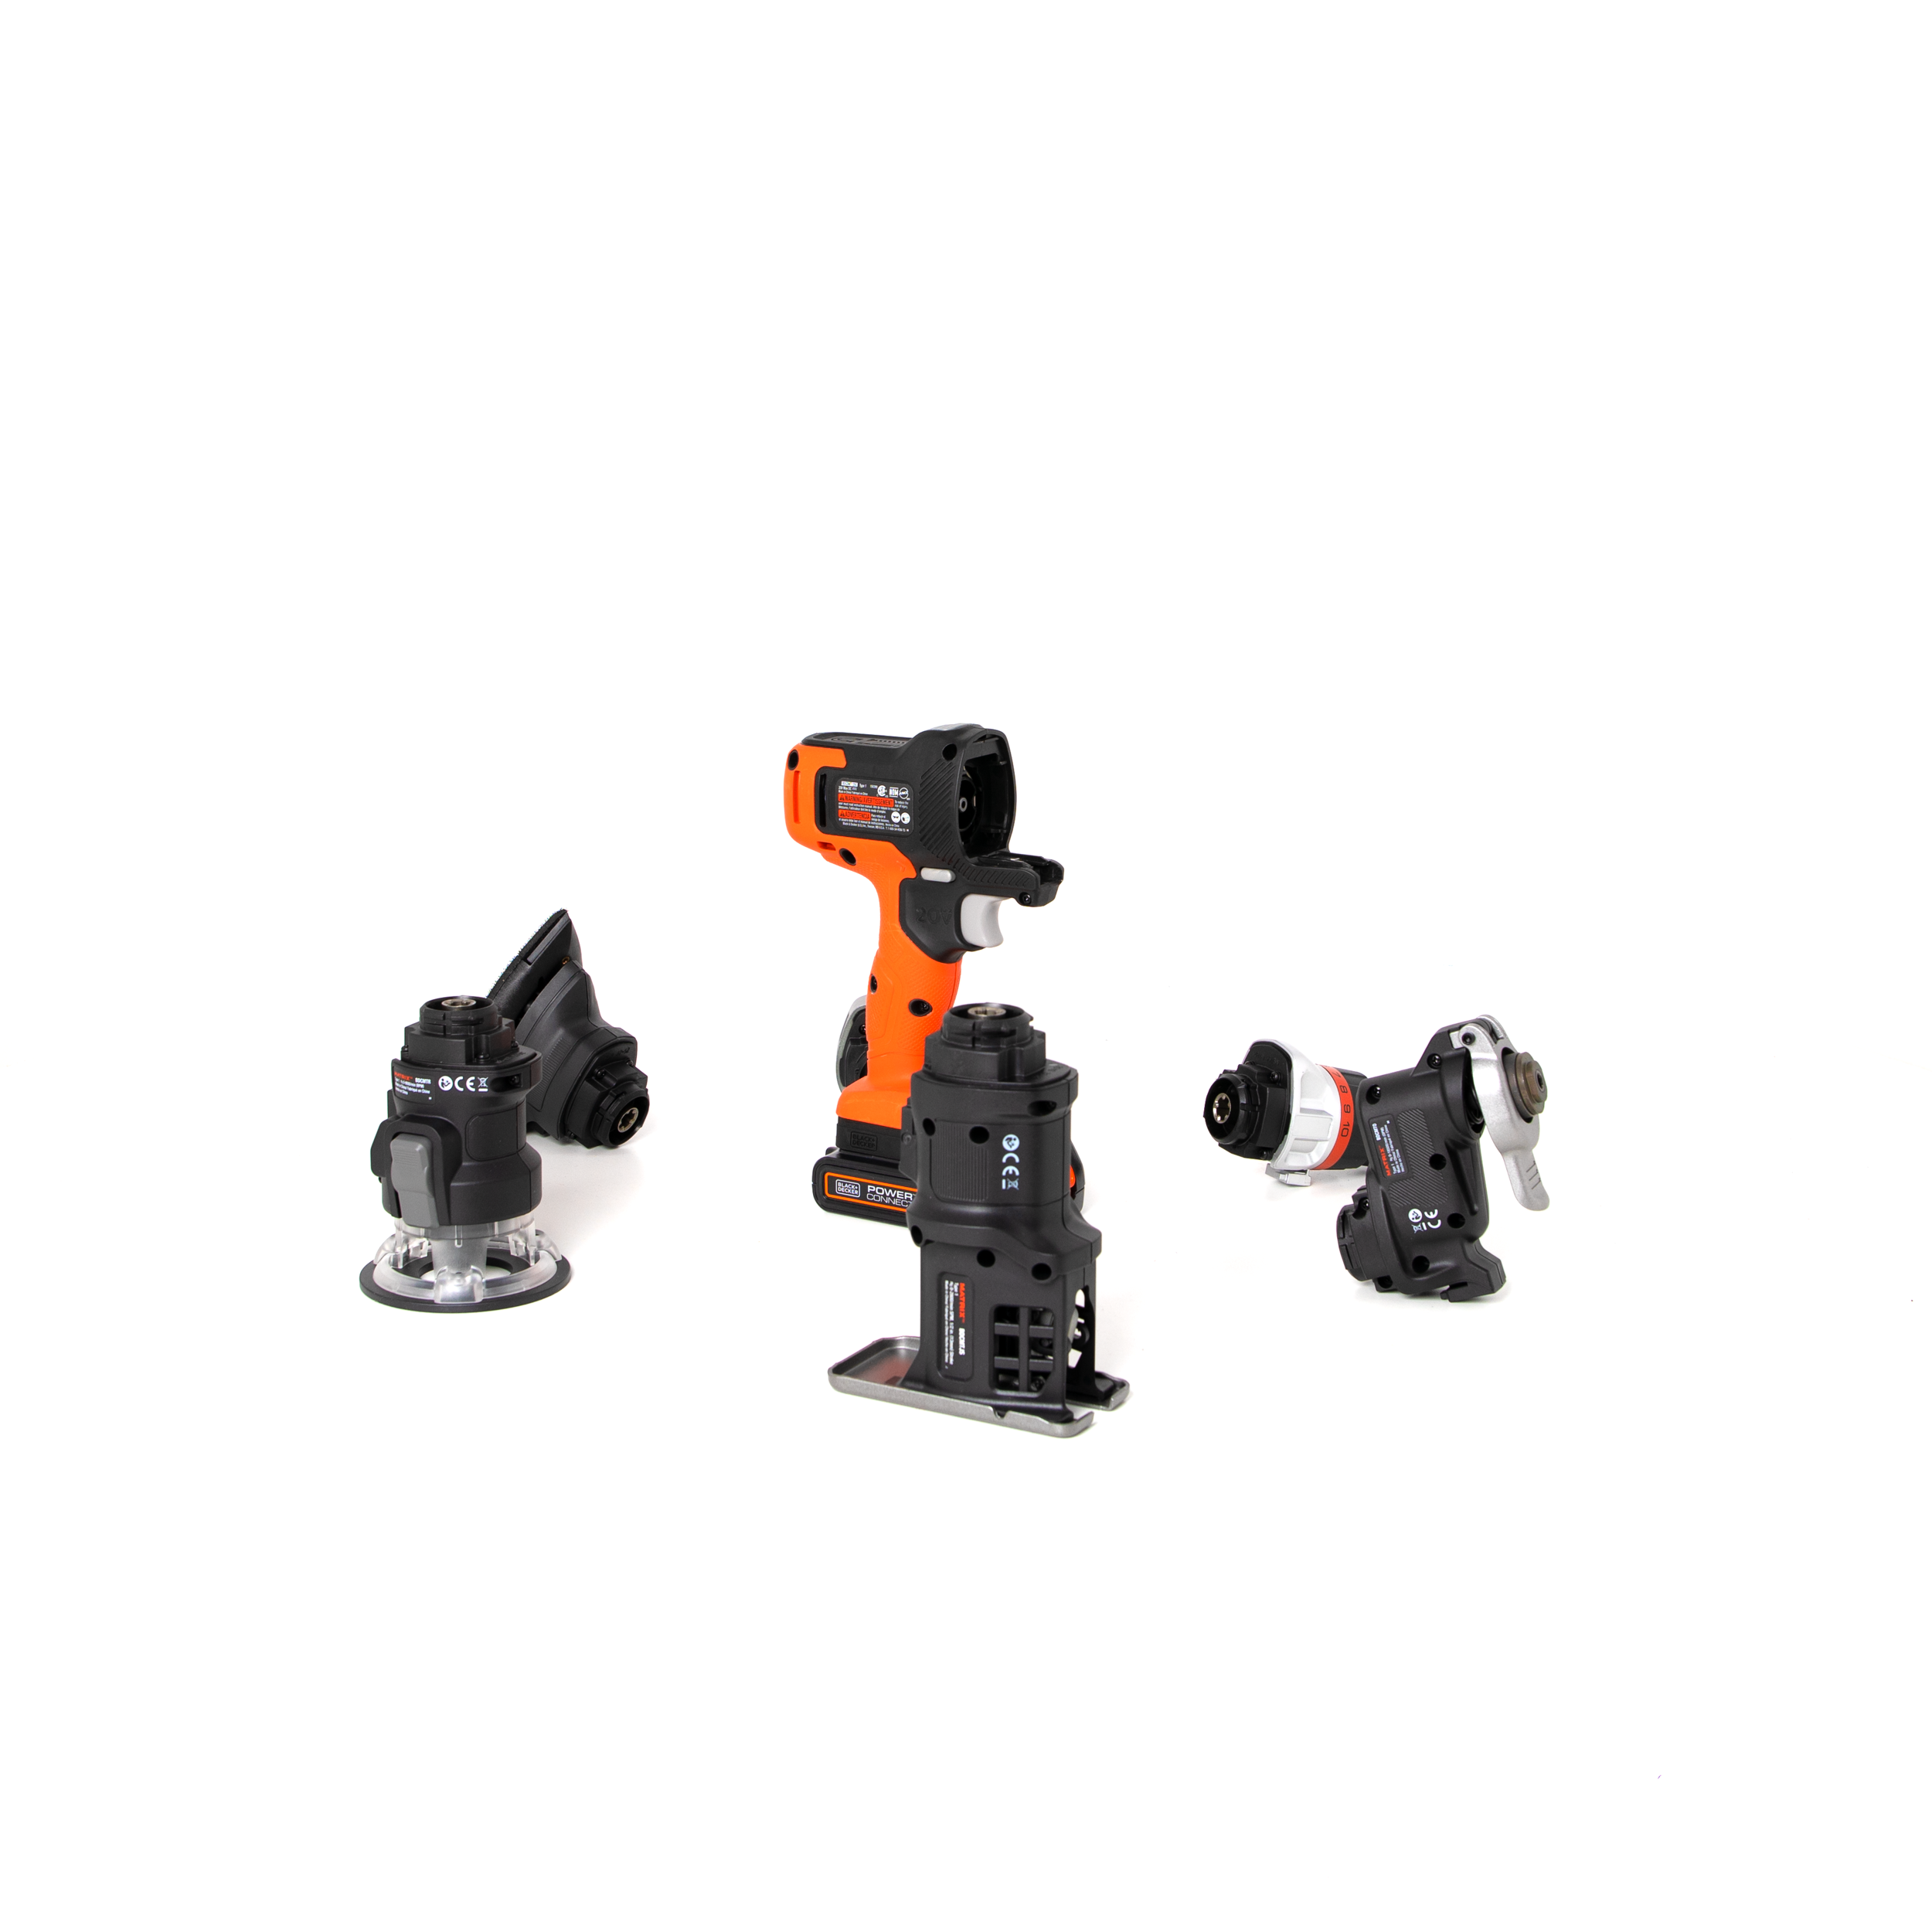 Black Decker Matrix Combo 6 Tool Kit Cordless Set 20V Drill Sander Jig Saw